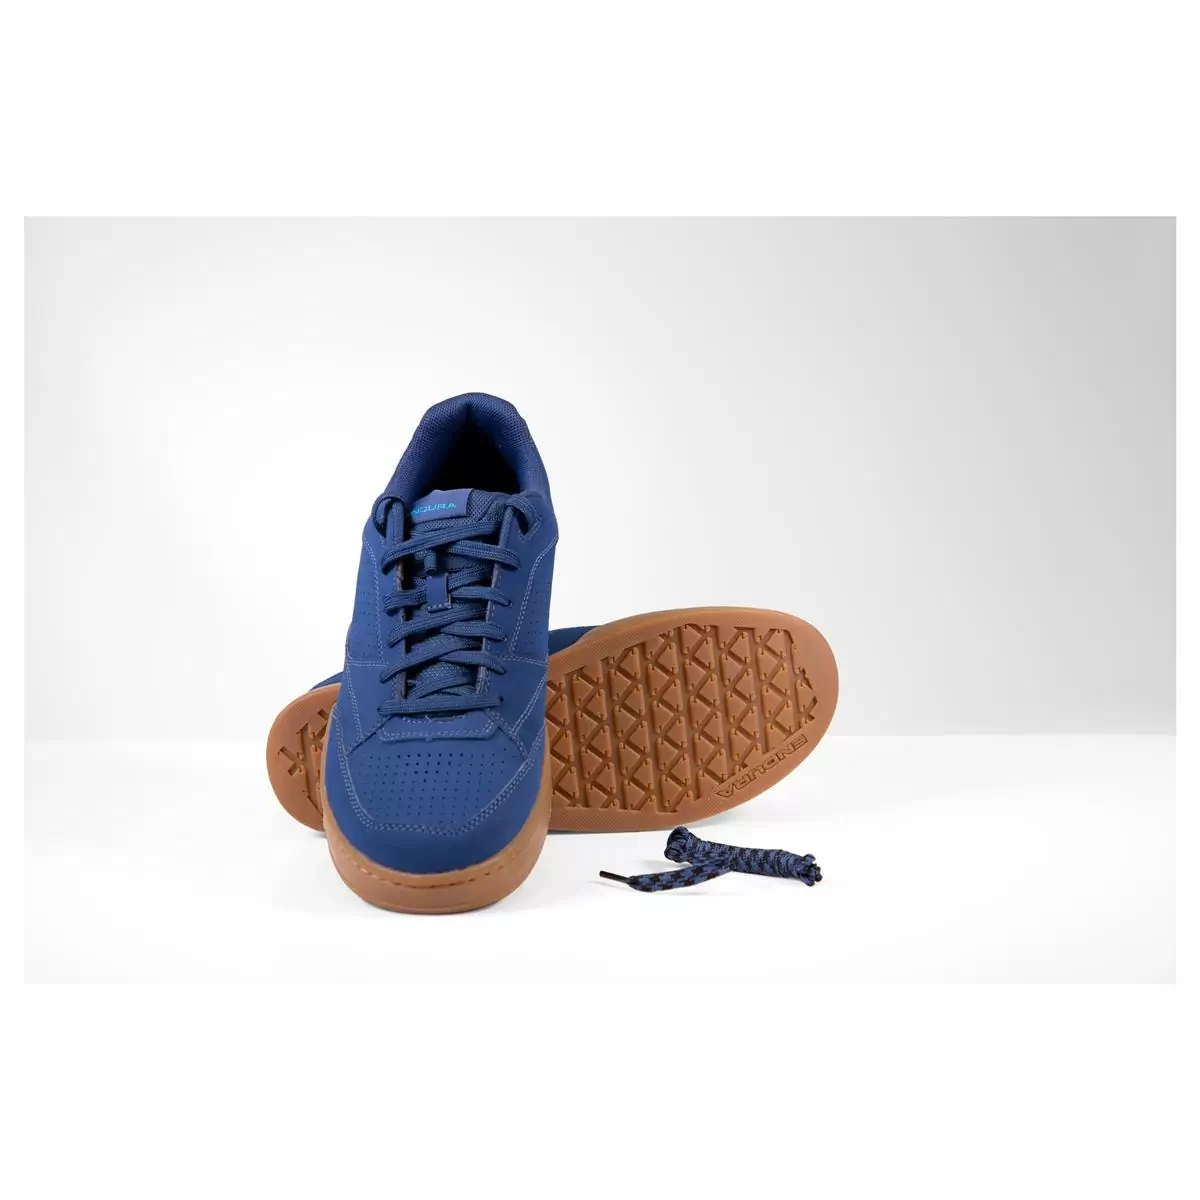 Hummvee Flat Pedal Shoes Blue Size 47 #3